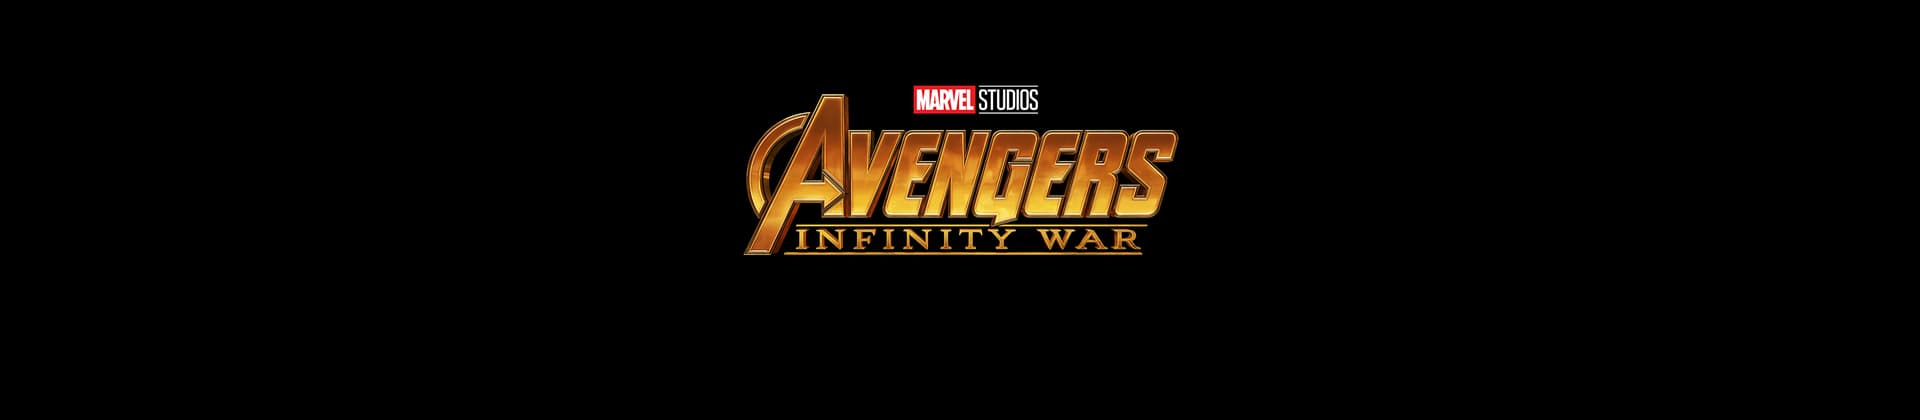 Avengers: Infinity War Movie Logo On Black